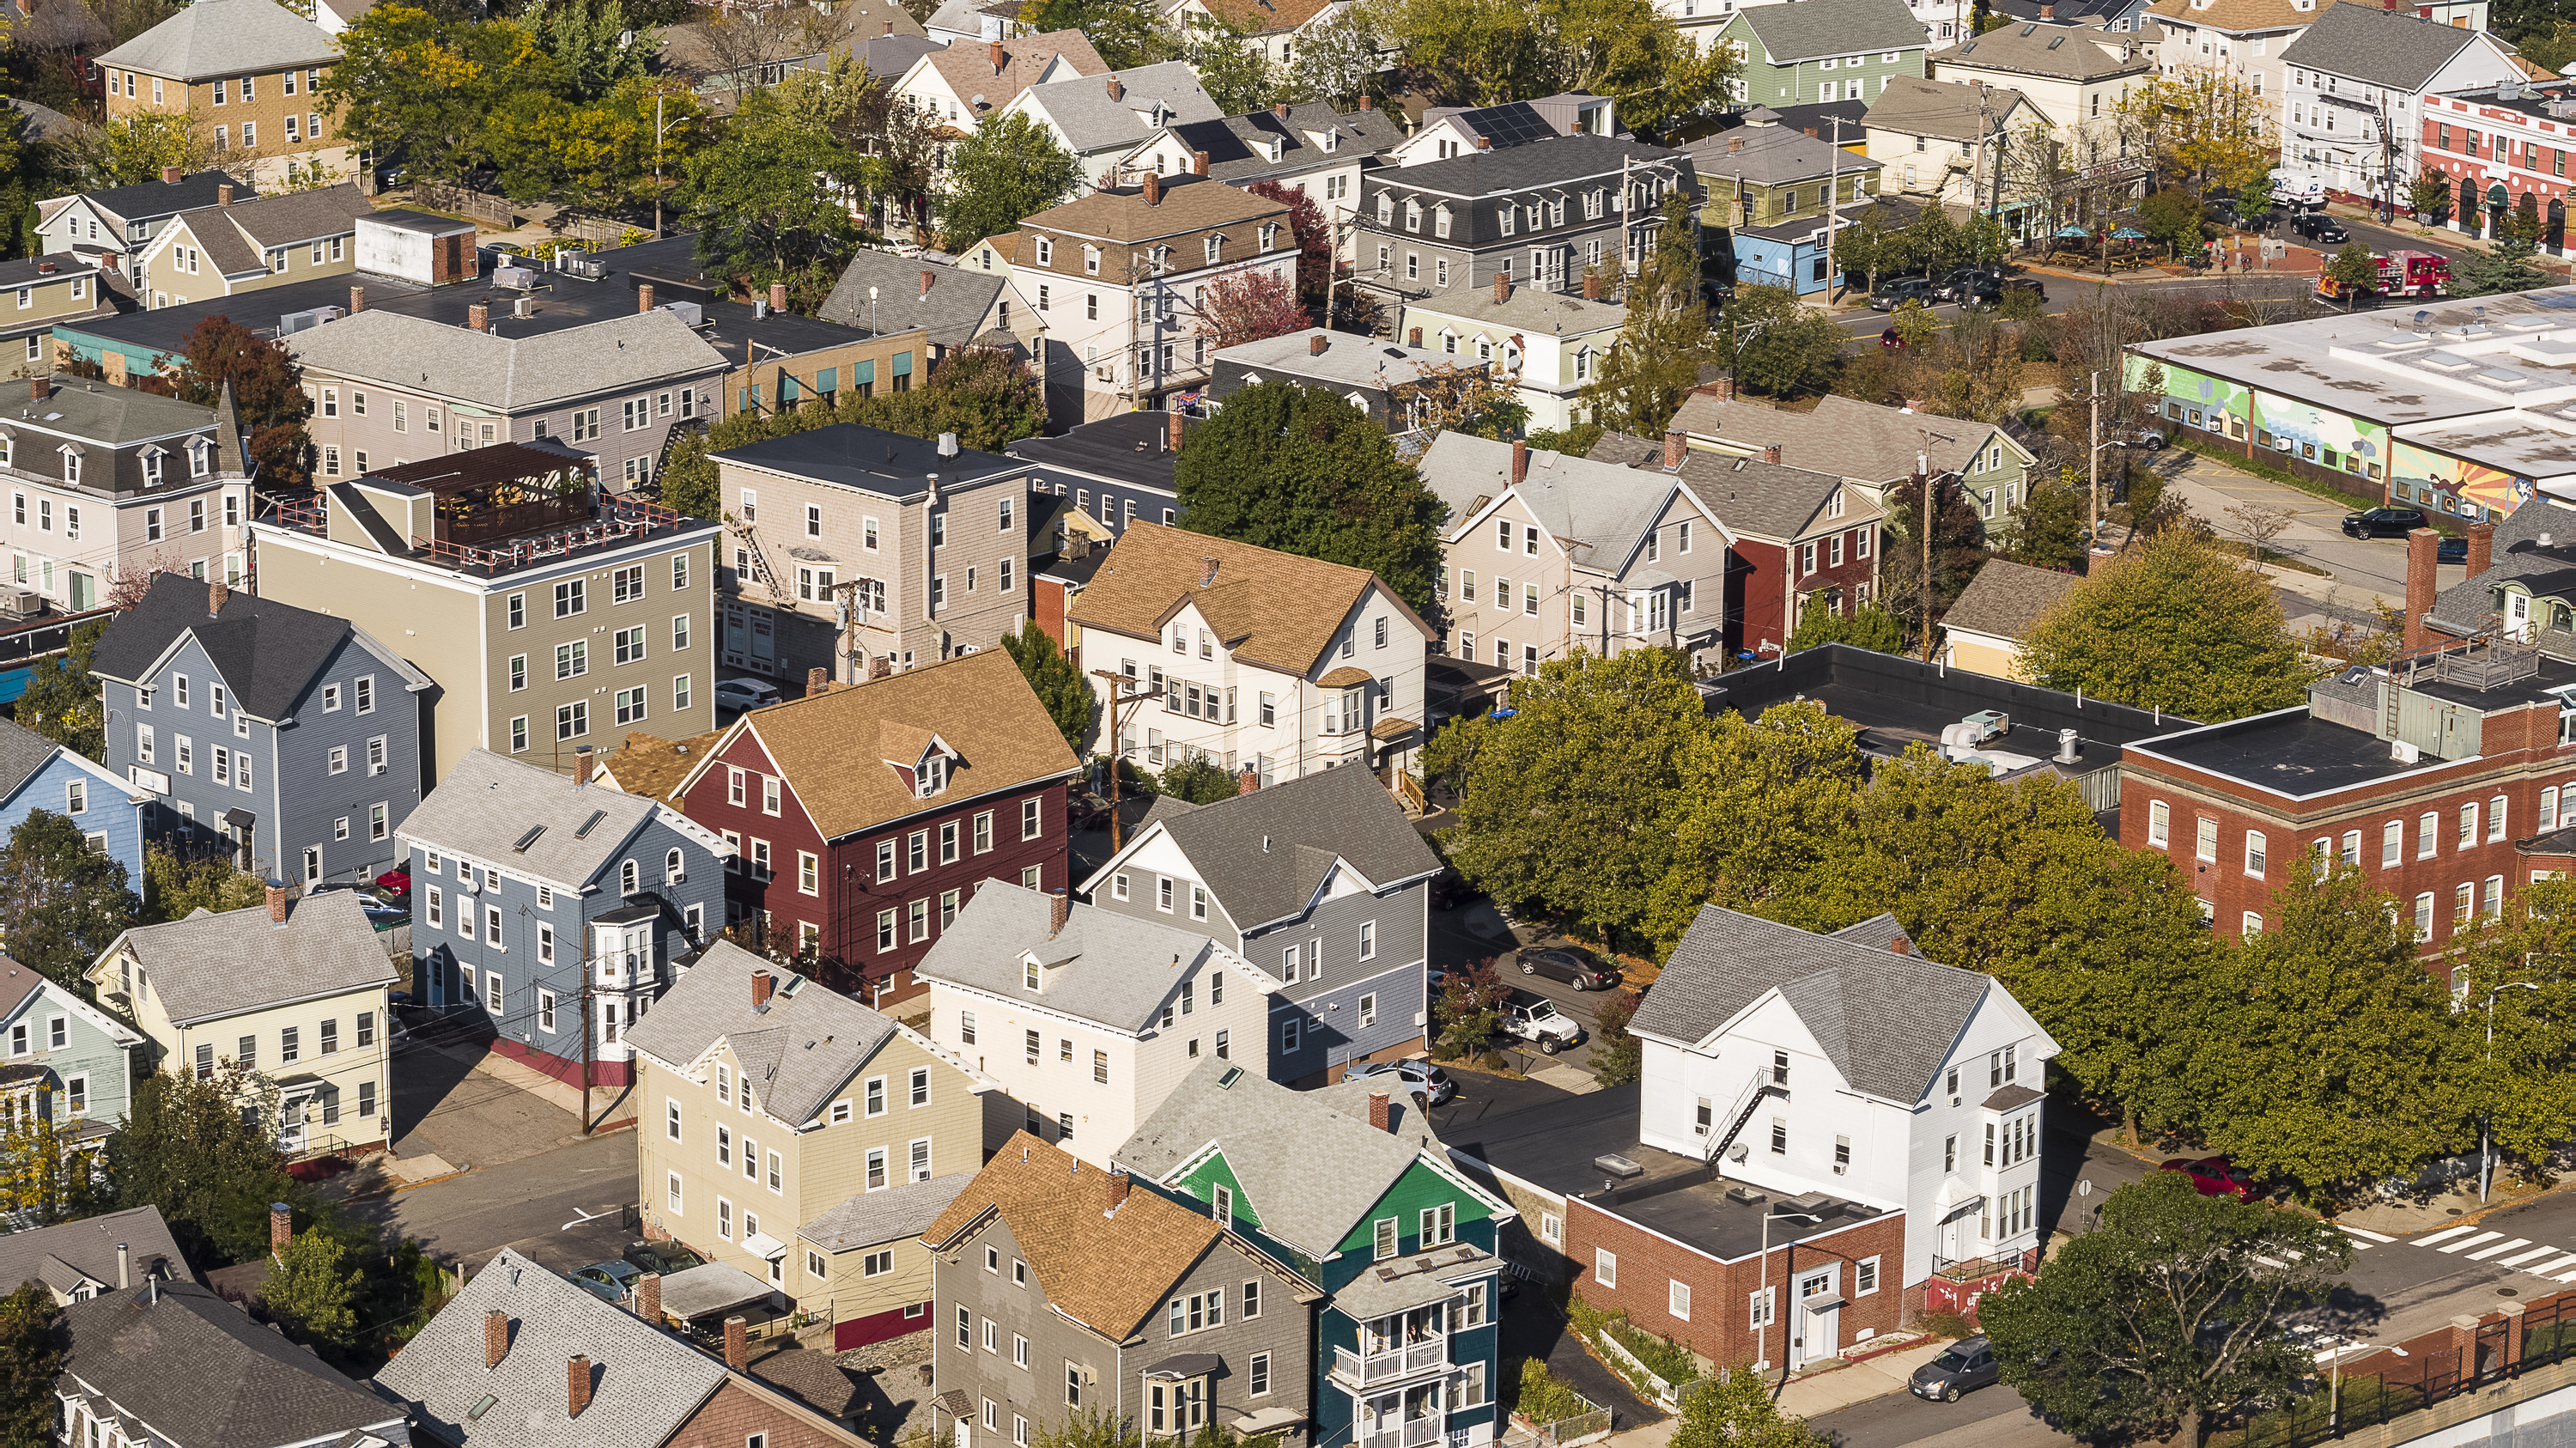 Residential neighborhood on Federal Hill, Providence, Rhode Island